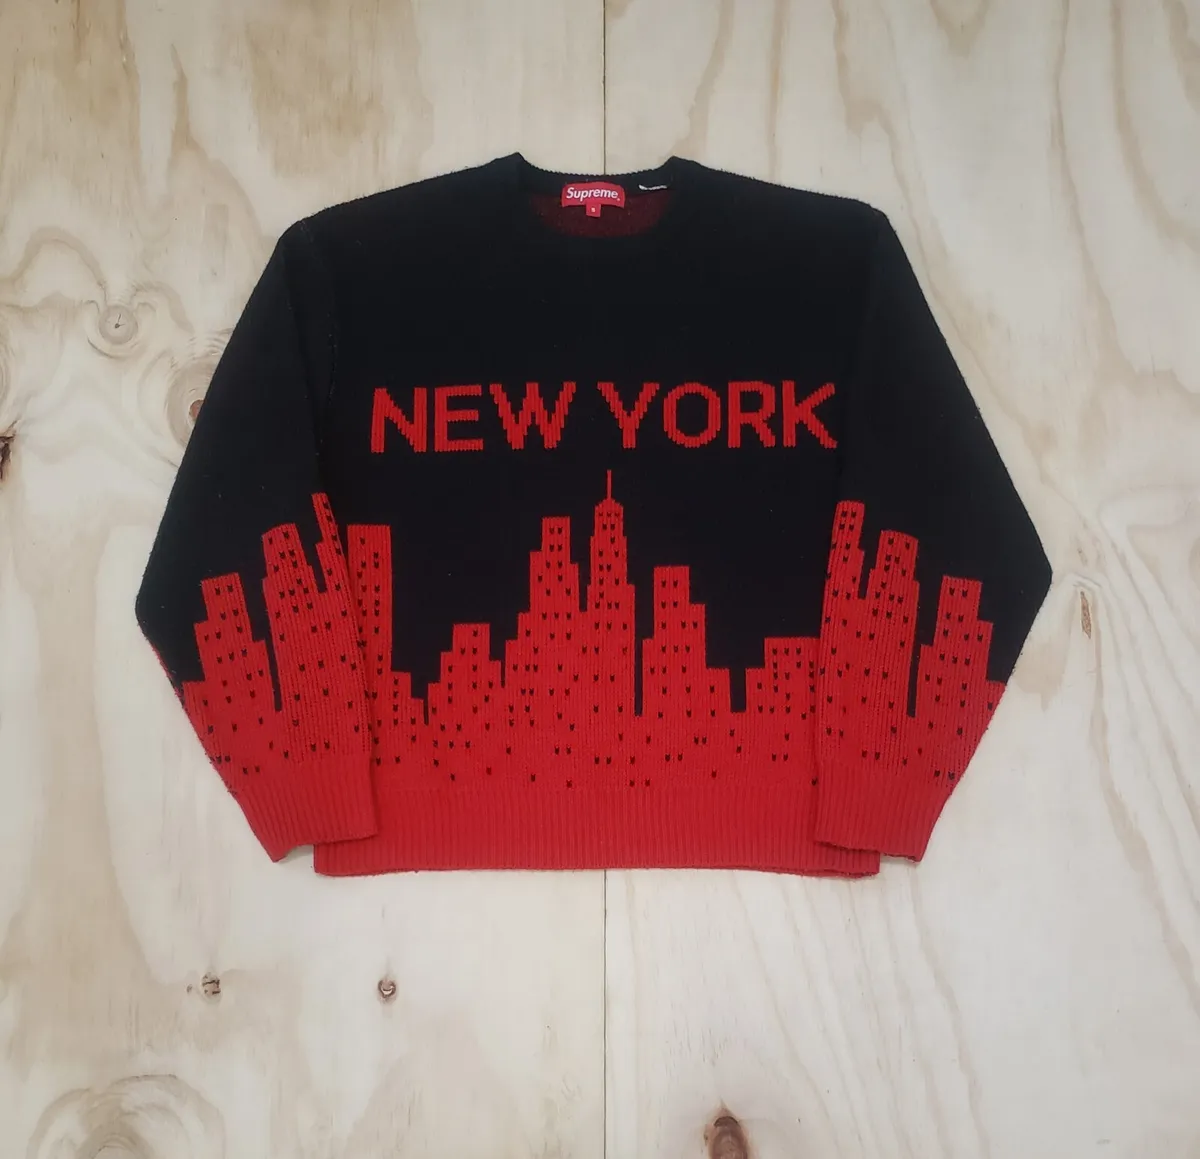 Supreme 23ss blured logo sweater XLサイズ